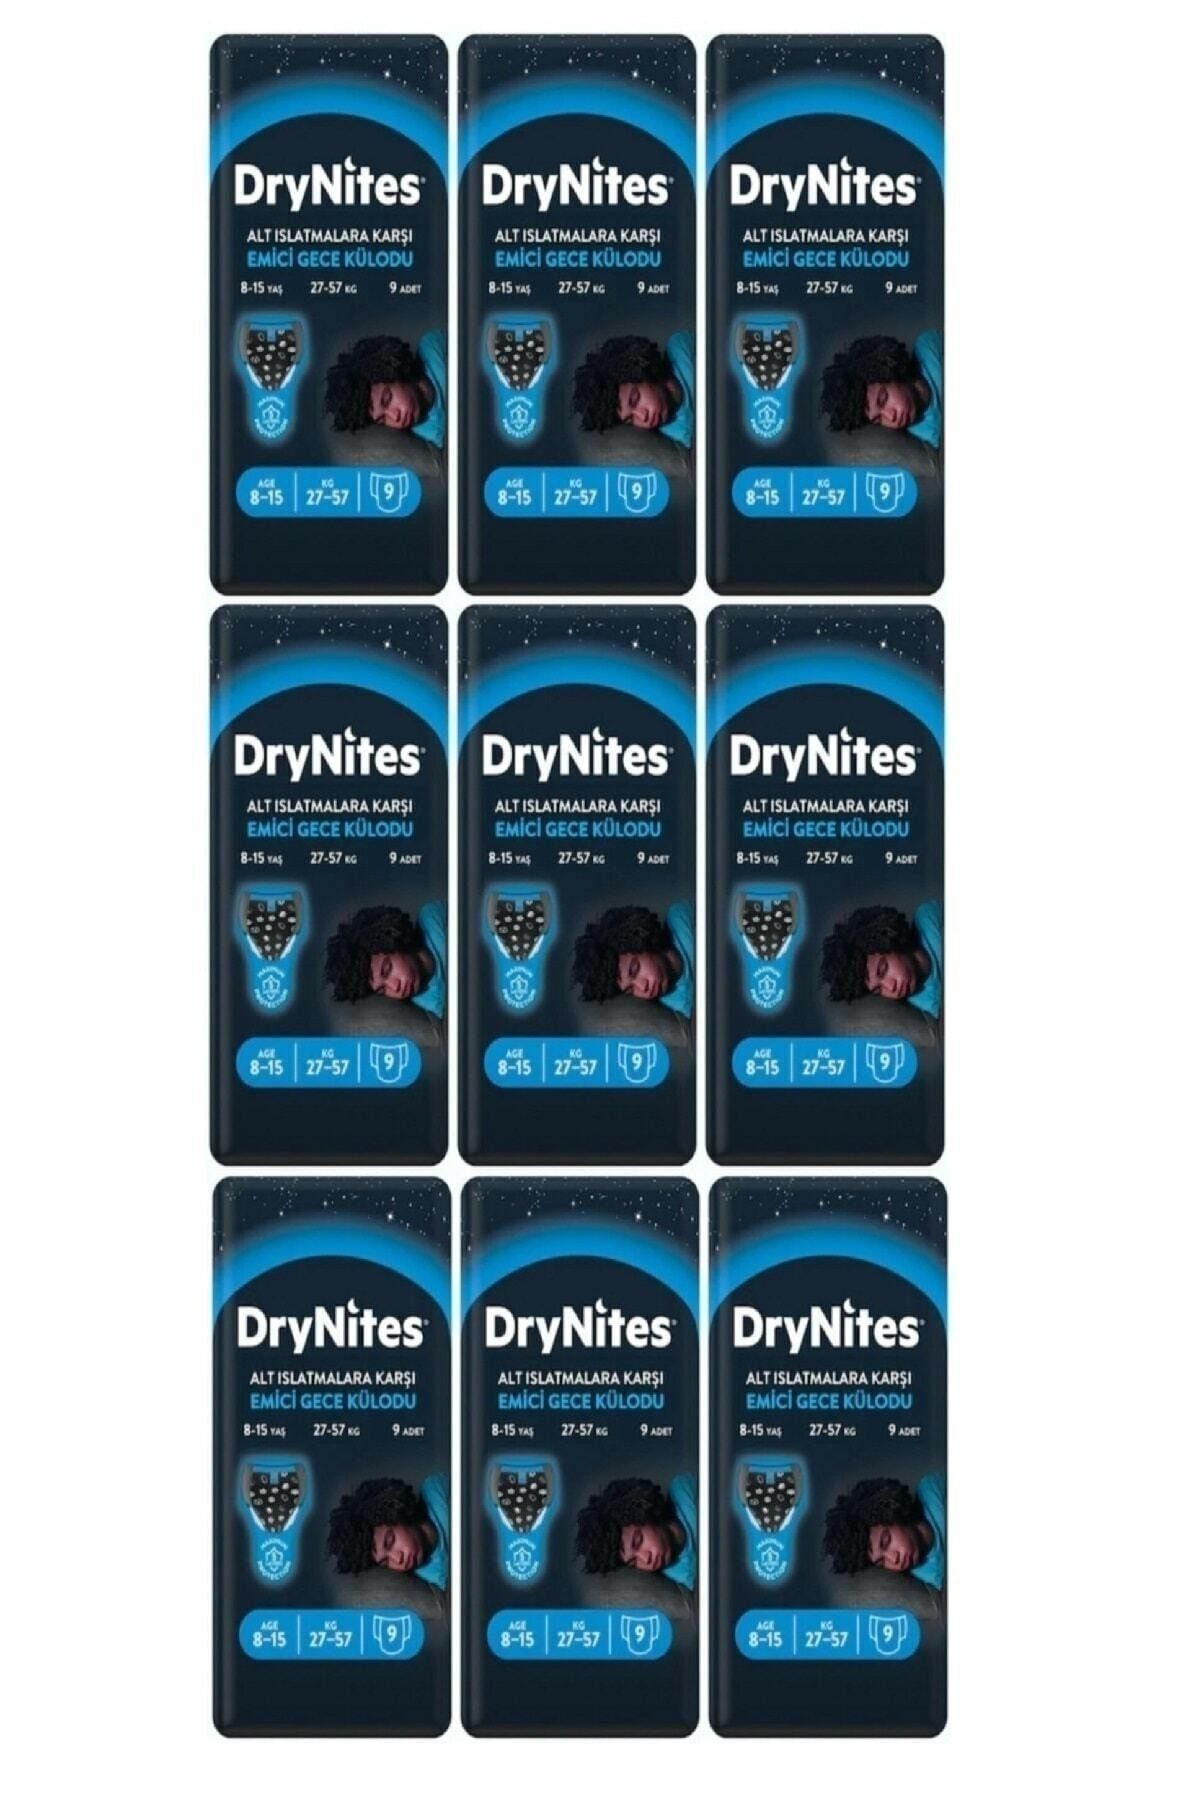 DryNites Erkek Emici Gece Külodu 8-15 Yaş 27-57  kg 9 Paket